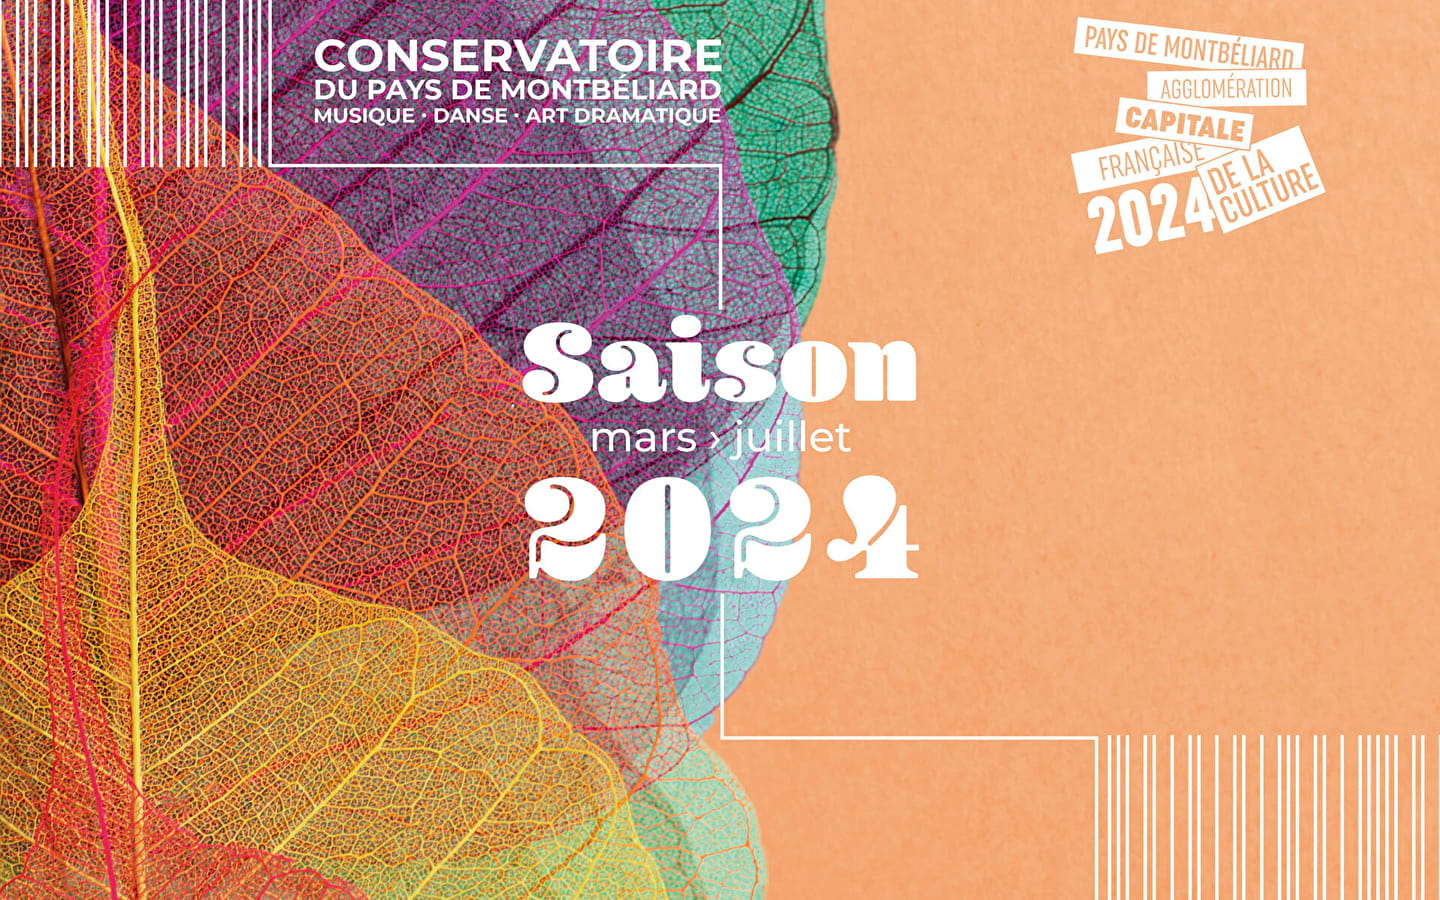 The Conservatoire's spring/summer 2024 season